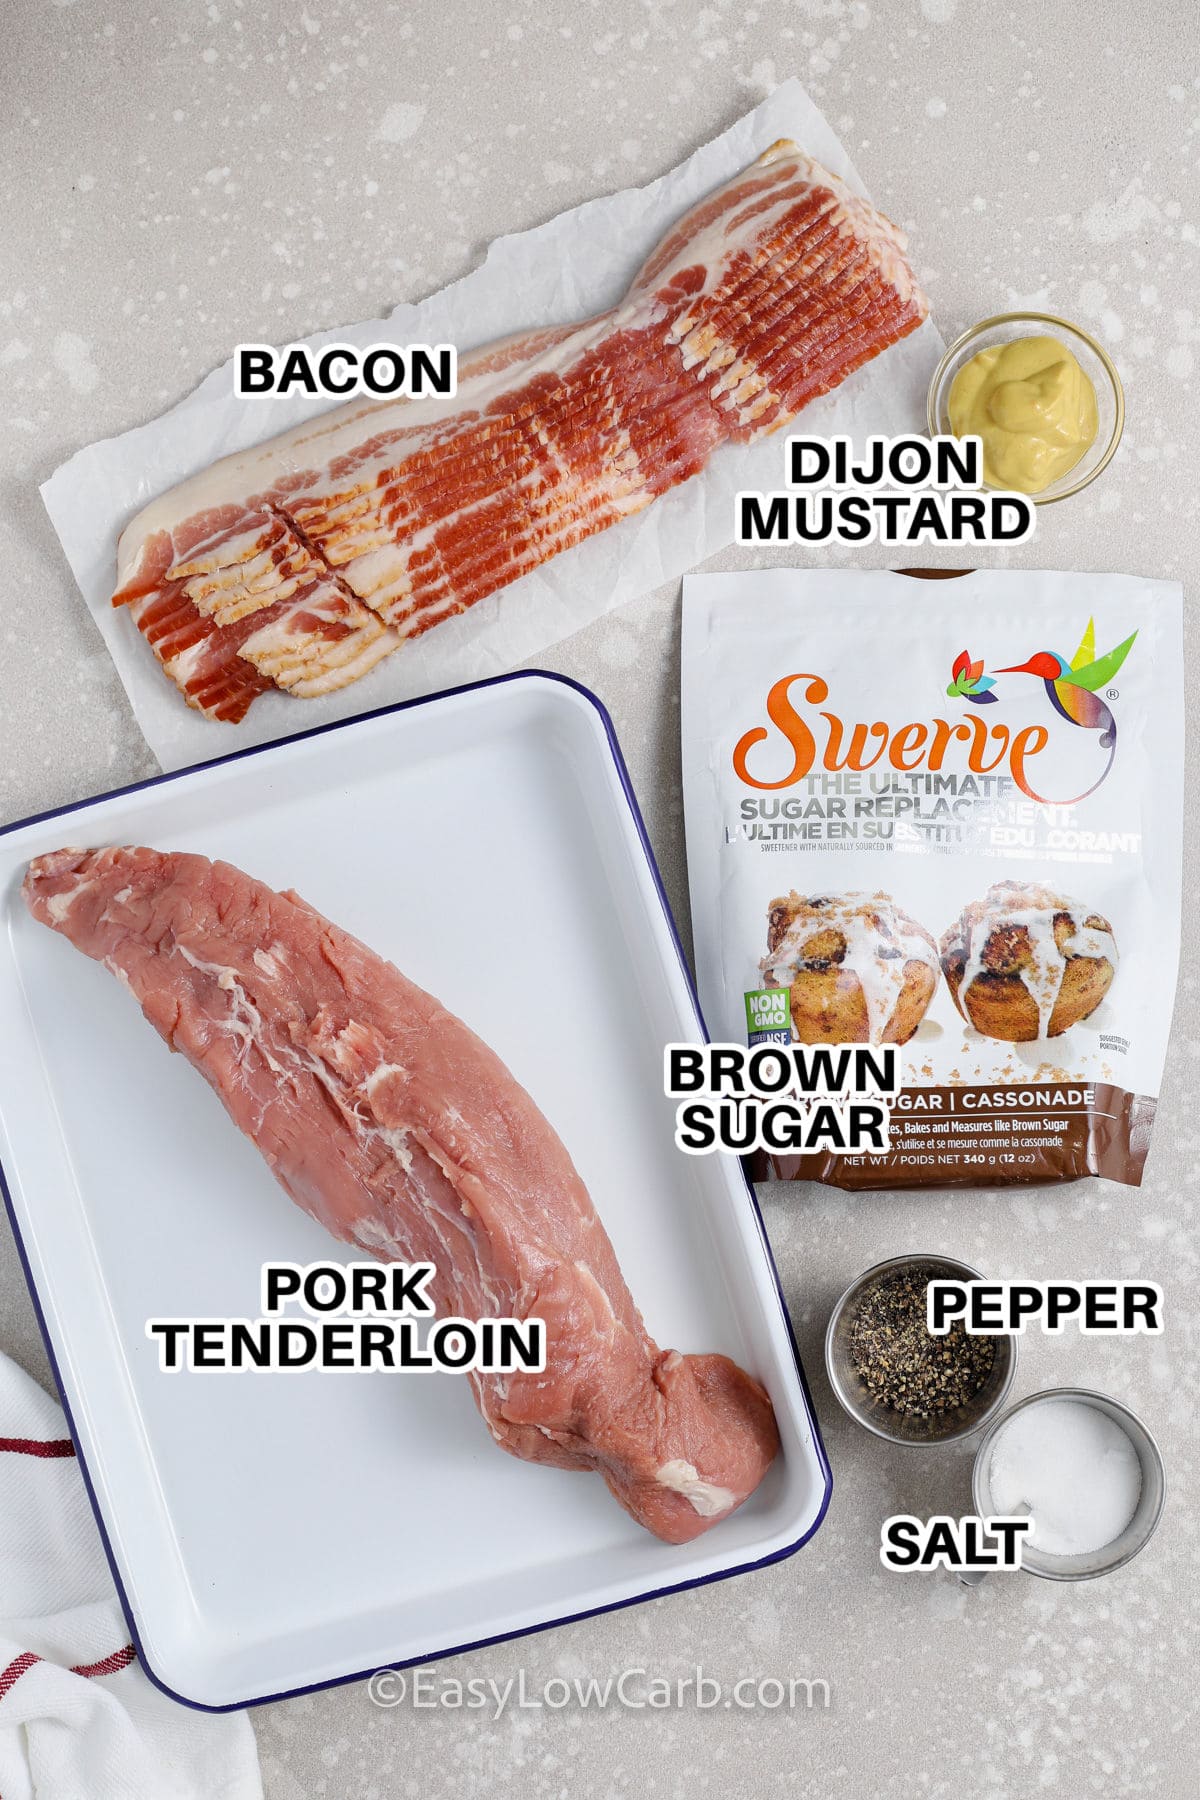 Ingredients to make Bacon Wrapped Pork Tenderloin labelled: bacon, dijon mustard, brown sugar, pepper, salt and pork tenderloin.